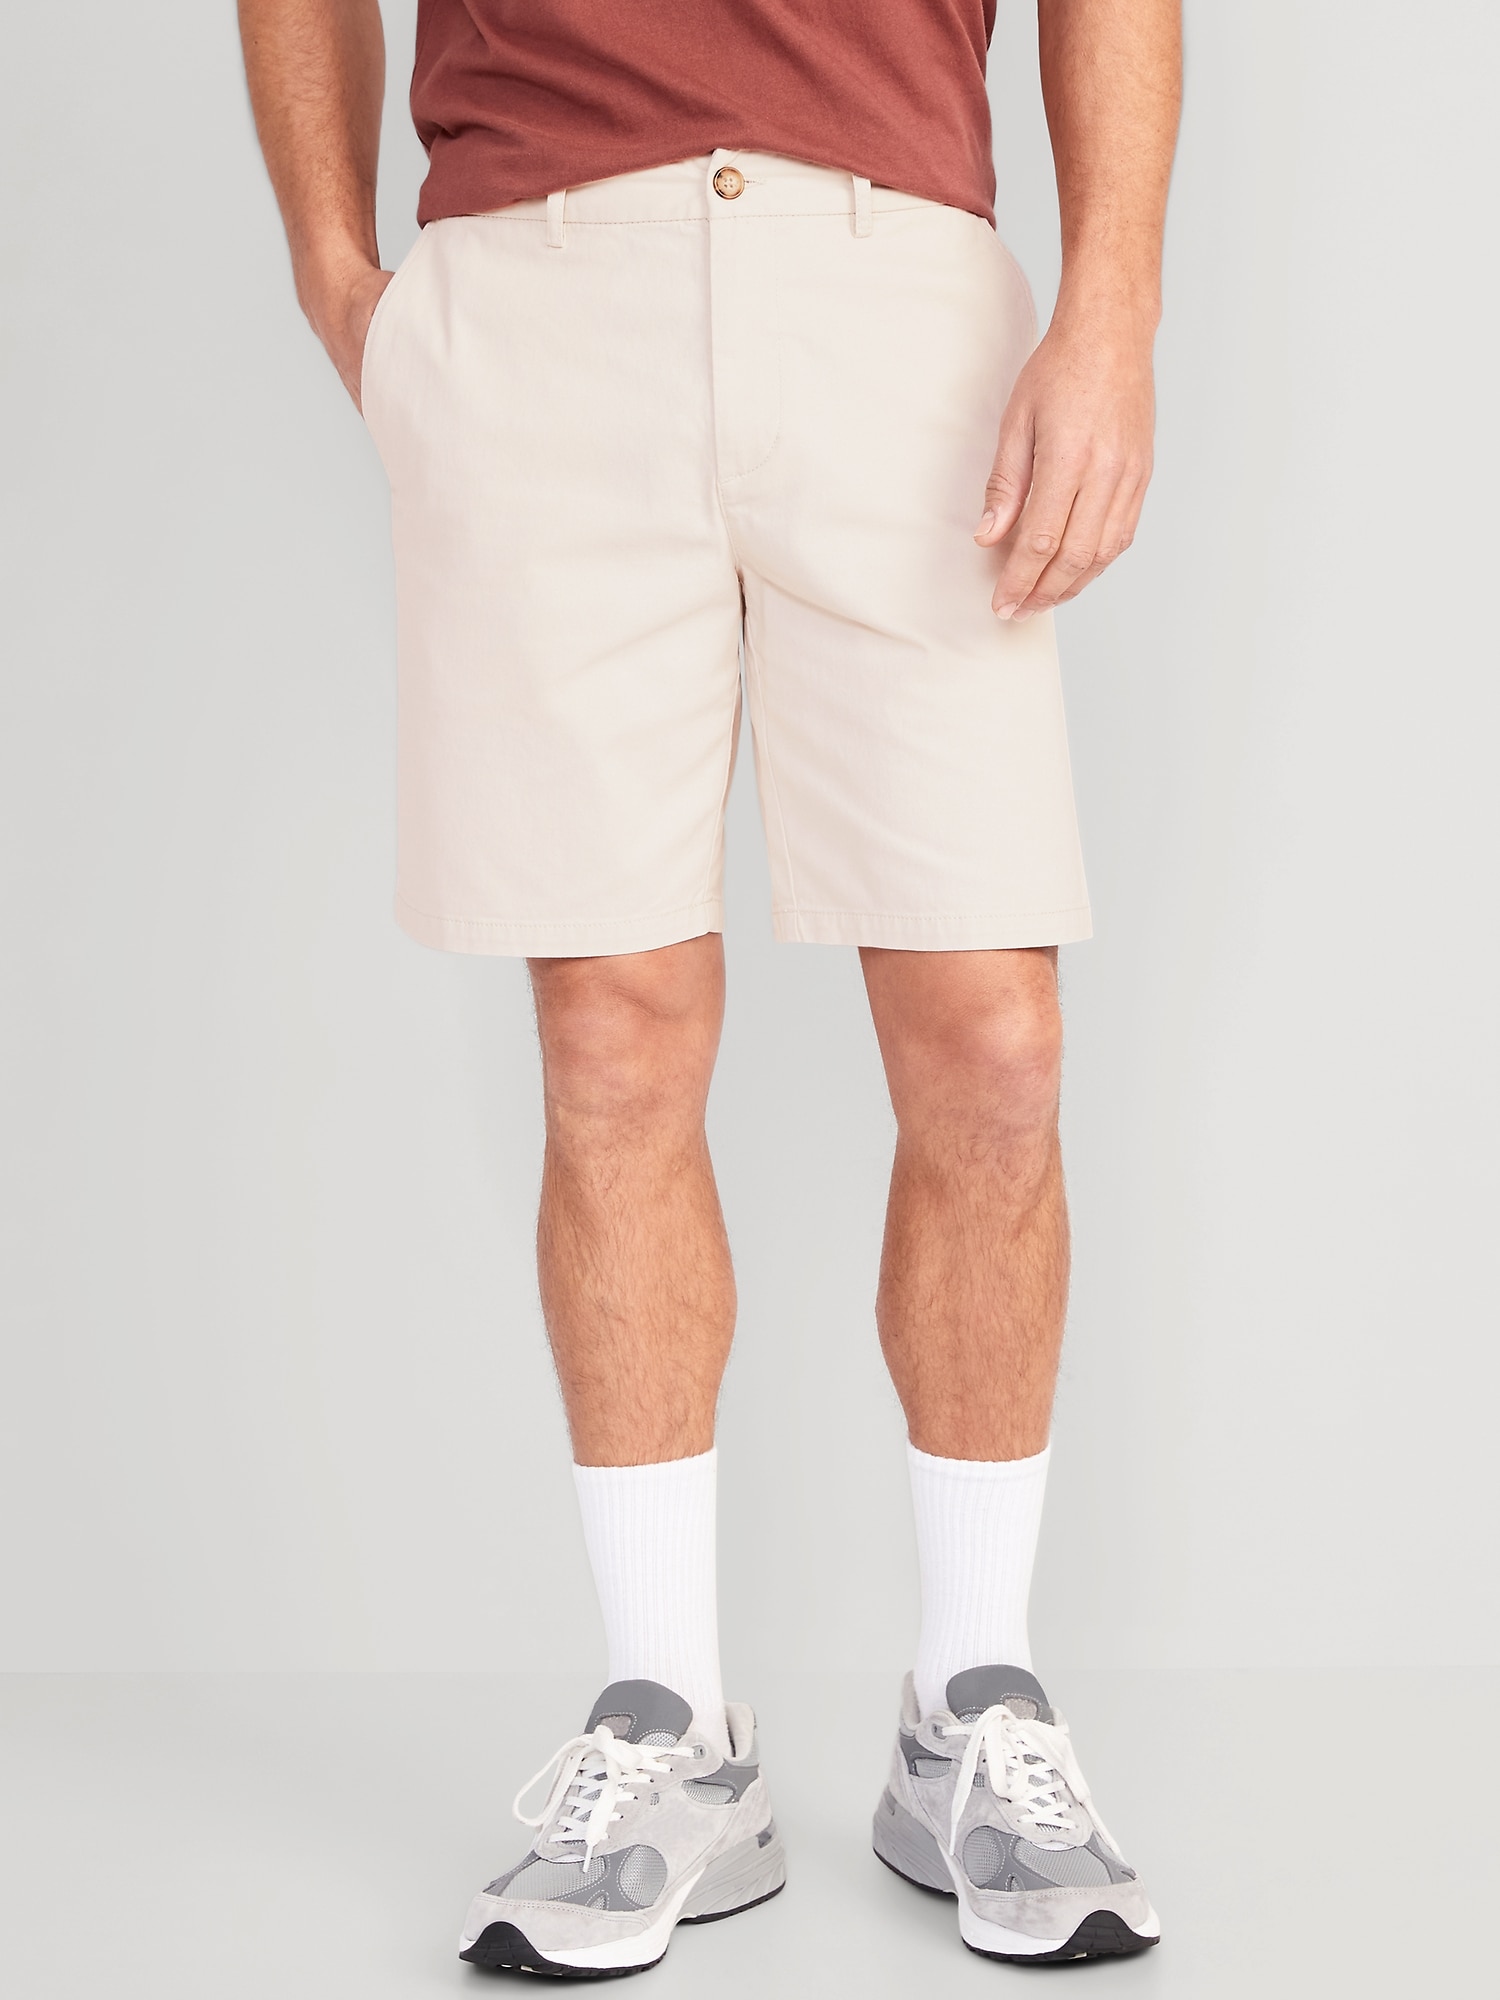 Old Navy Men's Slim Built-in Flex Cut-Off Jean Shorts -- 9.5-Inch Inseam - - Size 34W